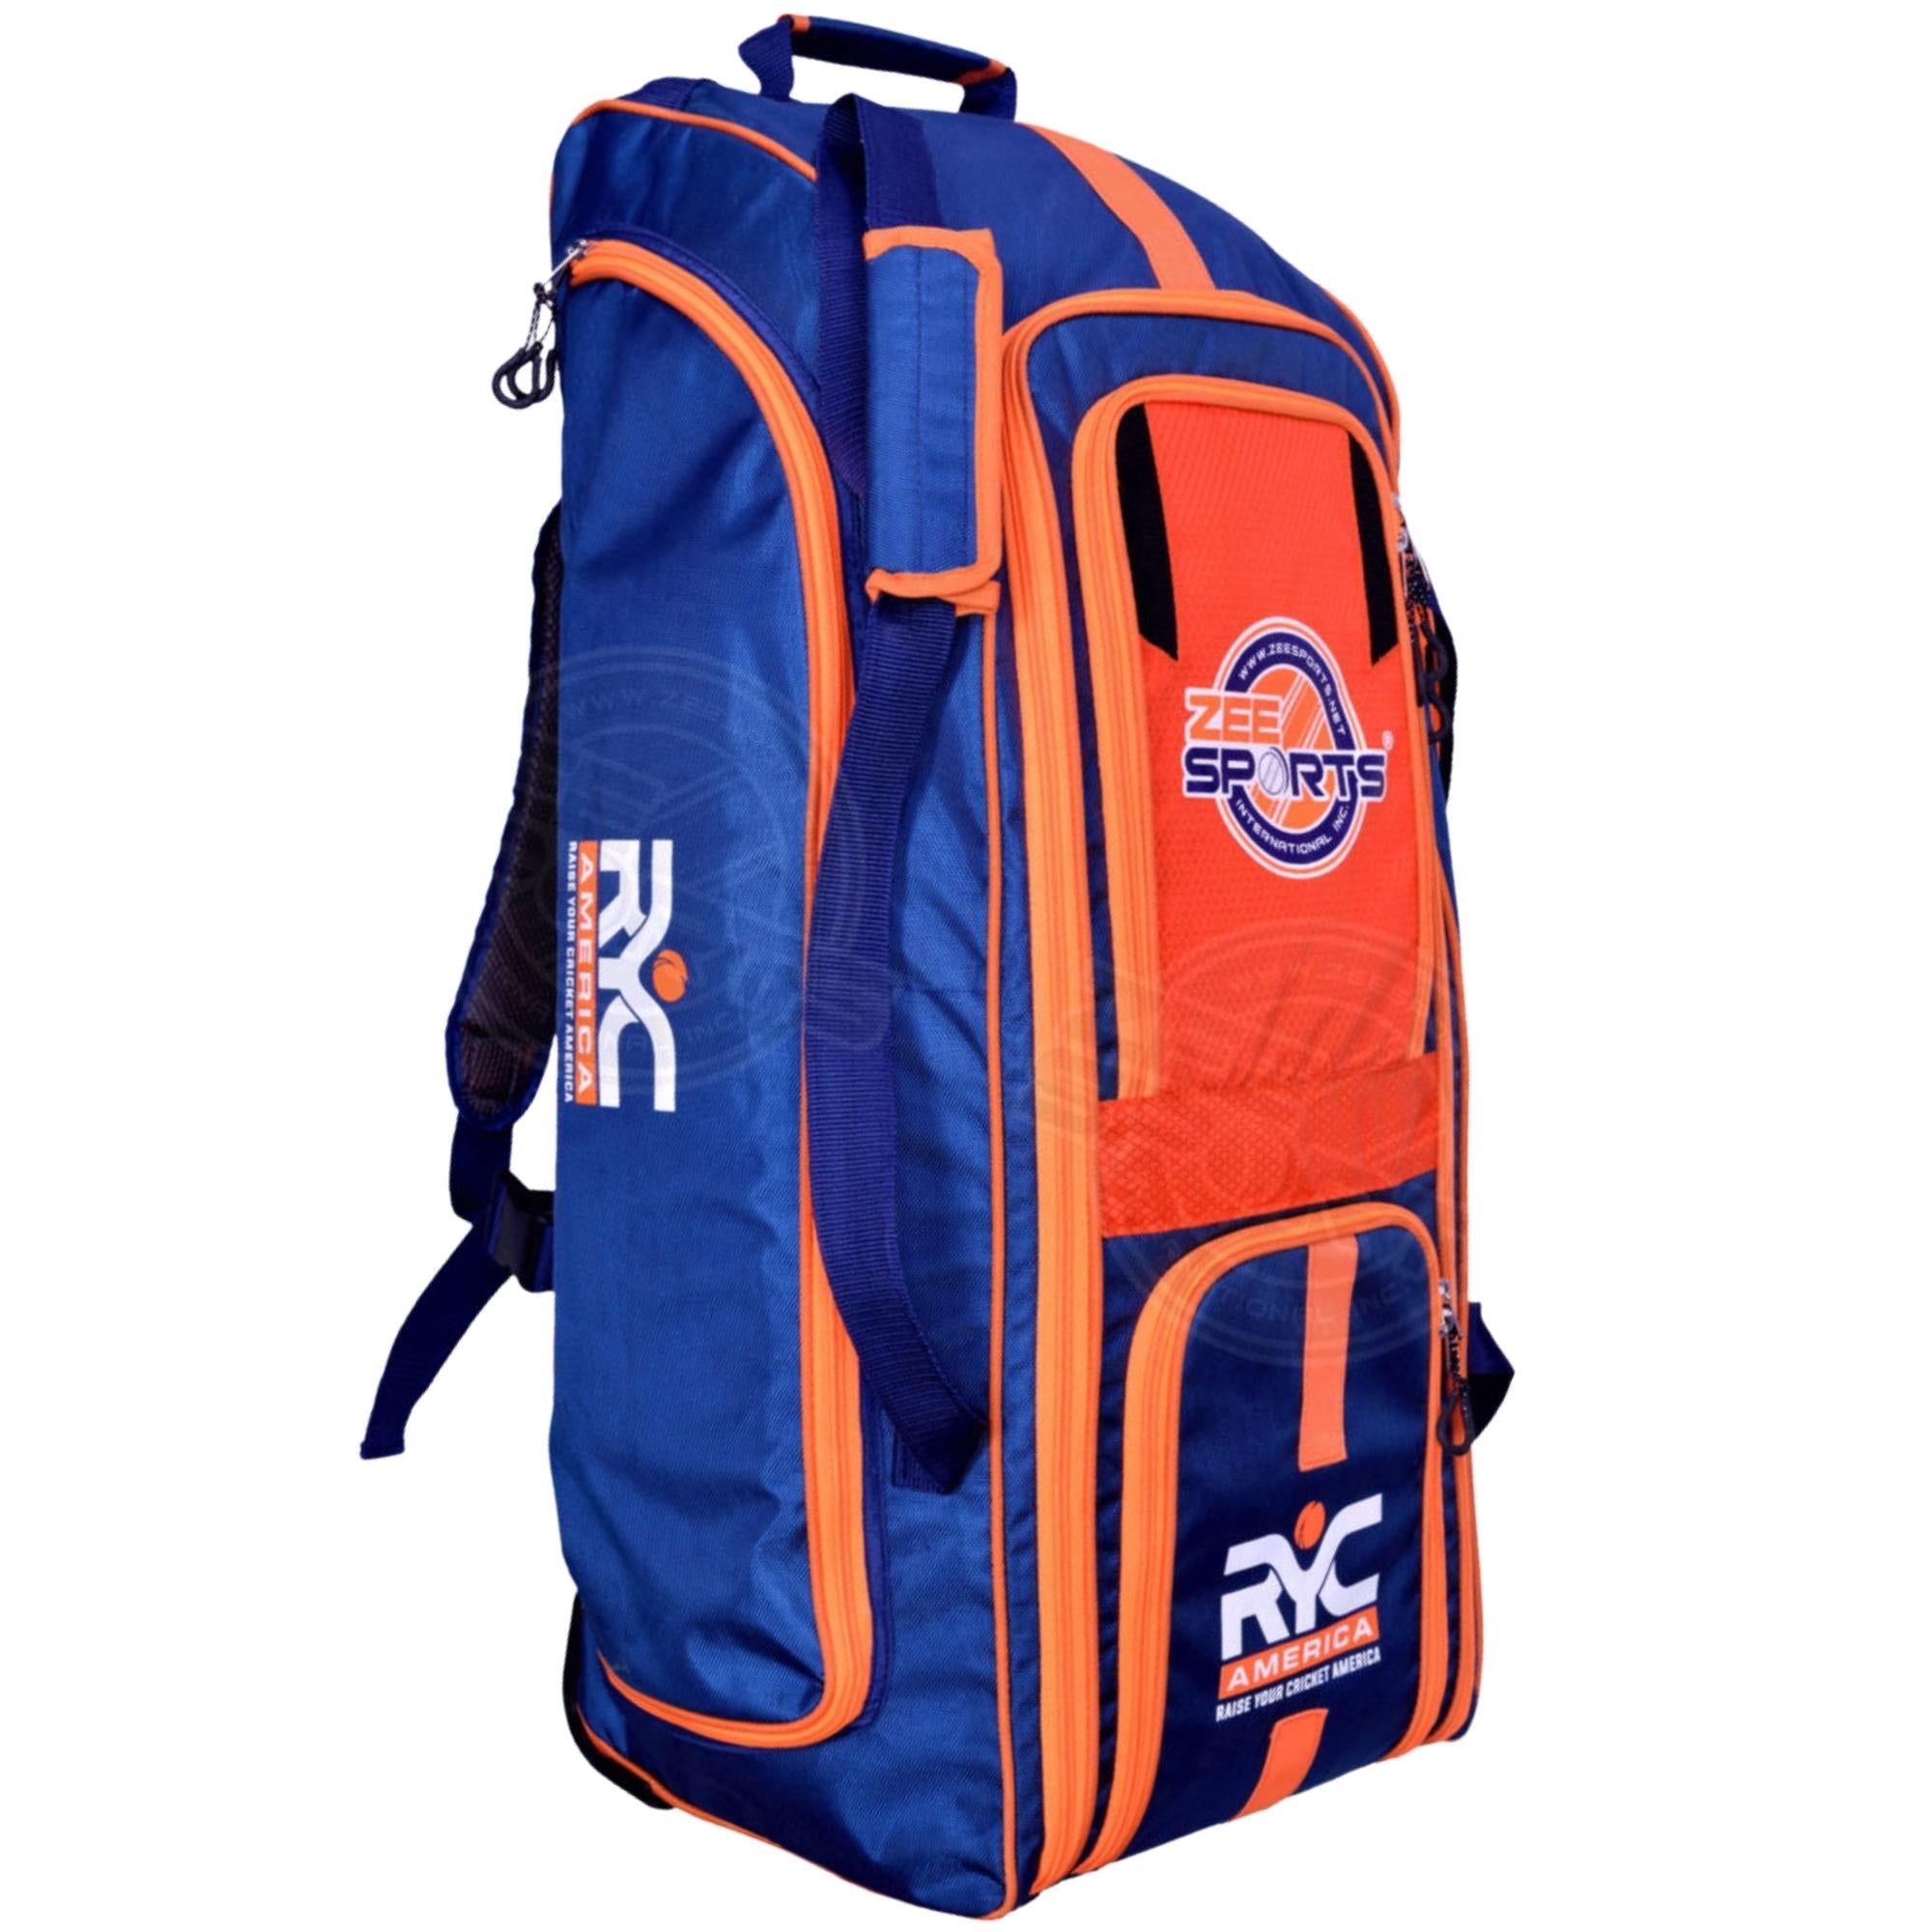 Zee Sports Wheelie BACK-PACK Kit Bag | RYC | Blue Orange